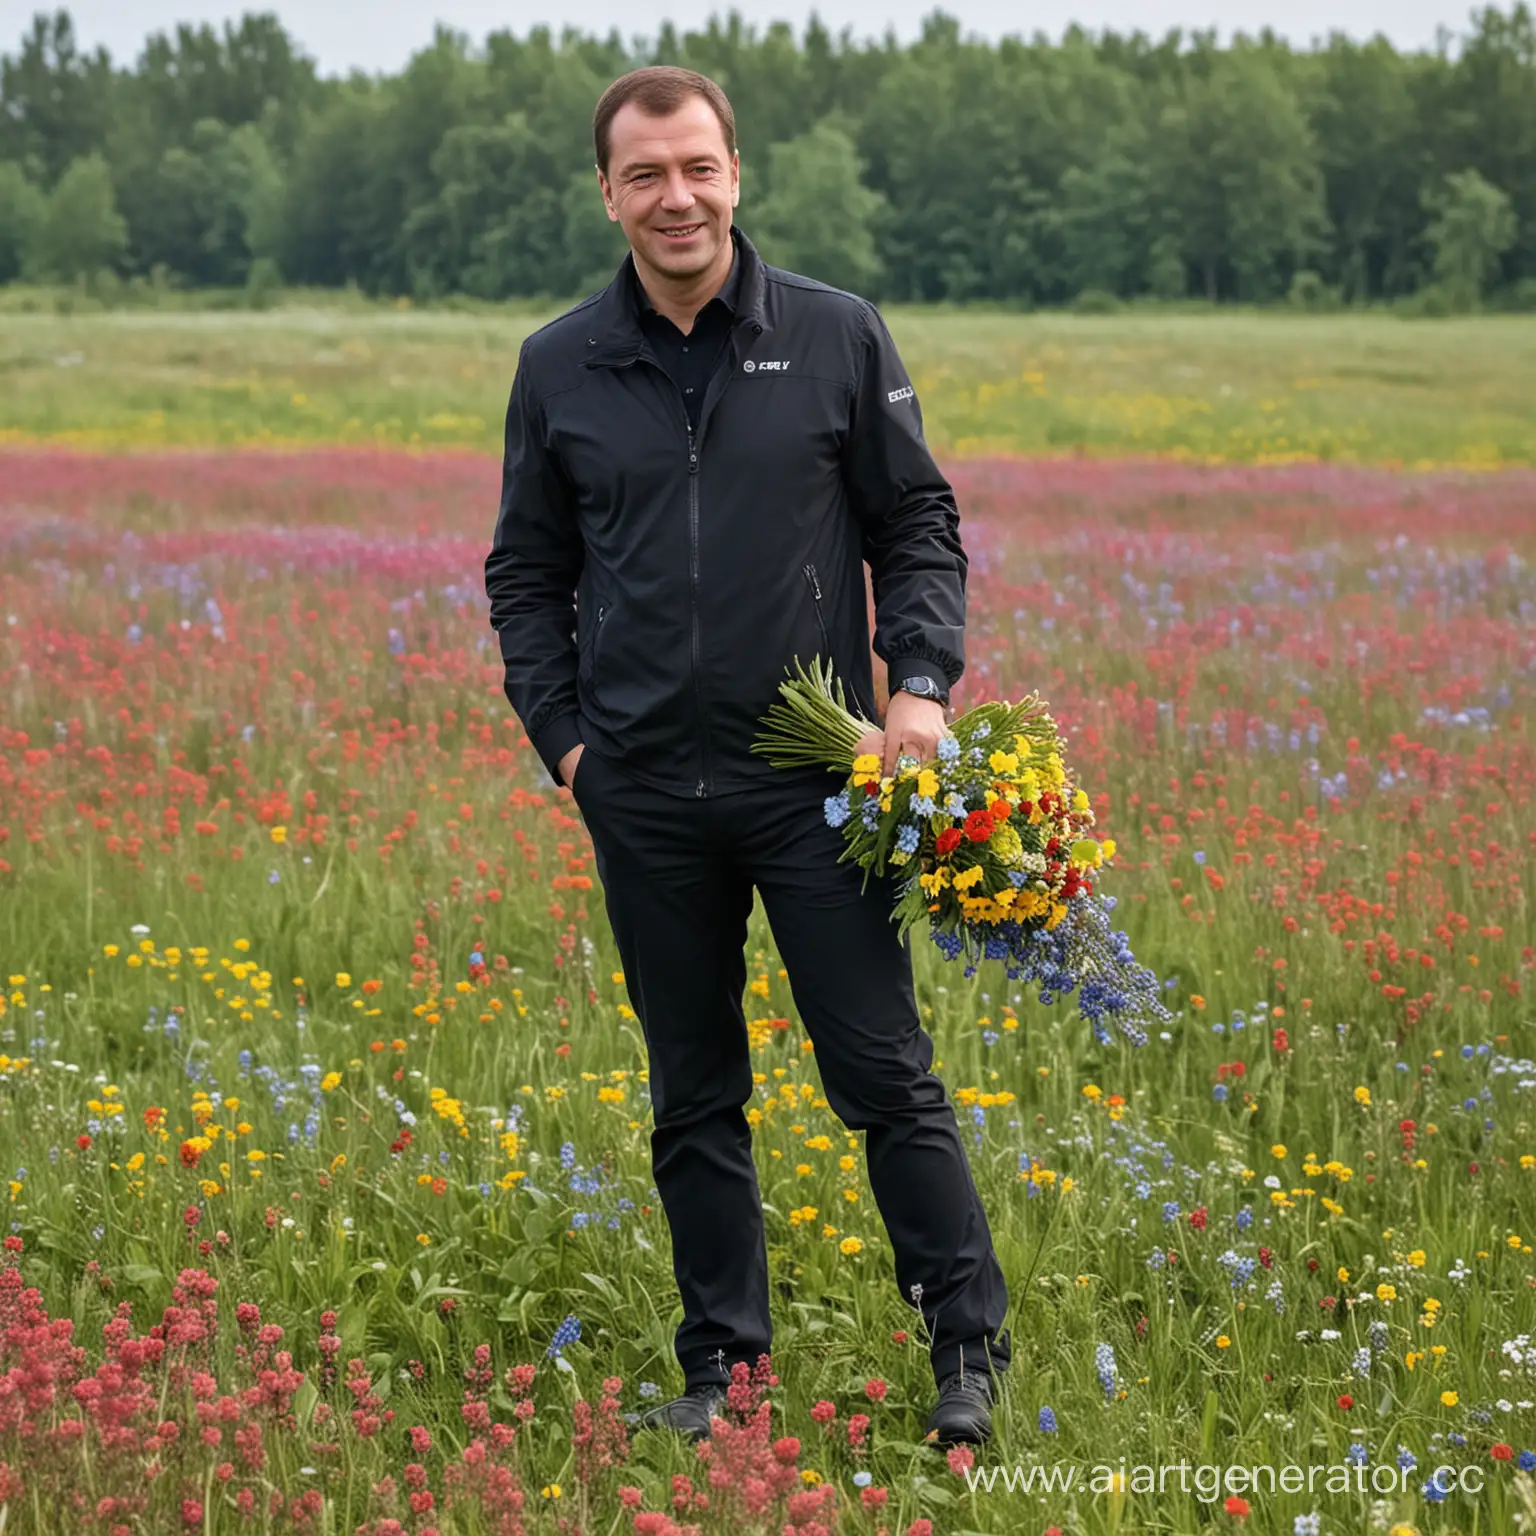 Dmitry-Medvedev-Holding-Wildflower-Bouquet-in-Rustic-Field